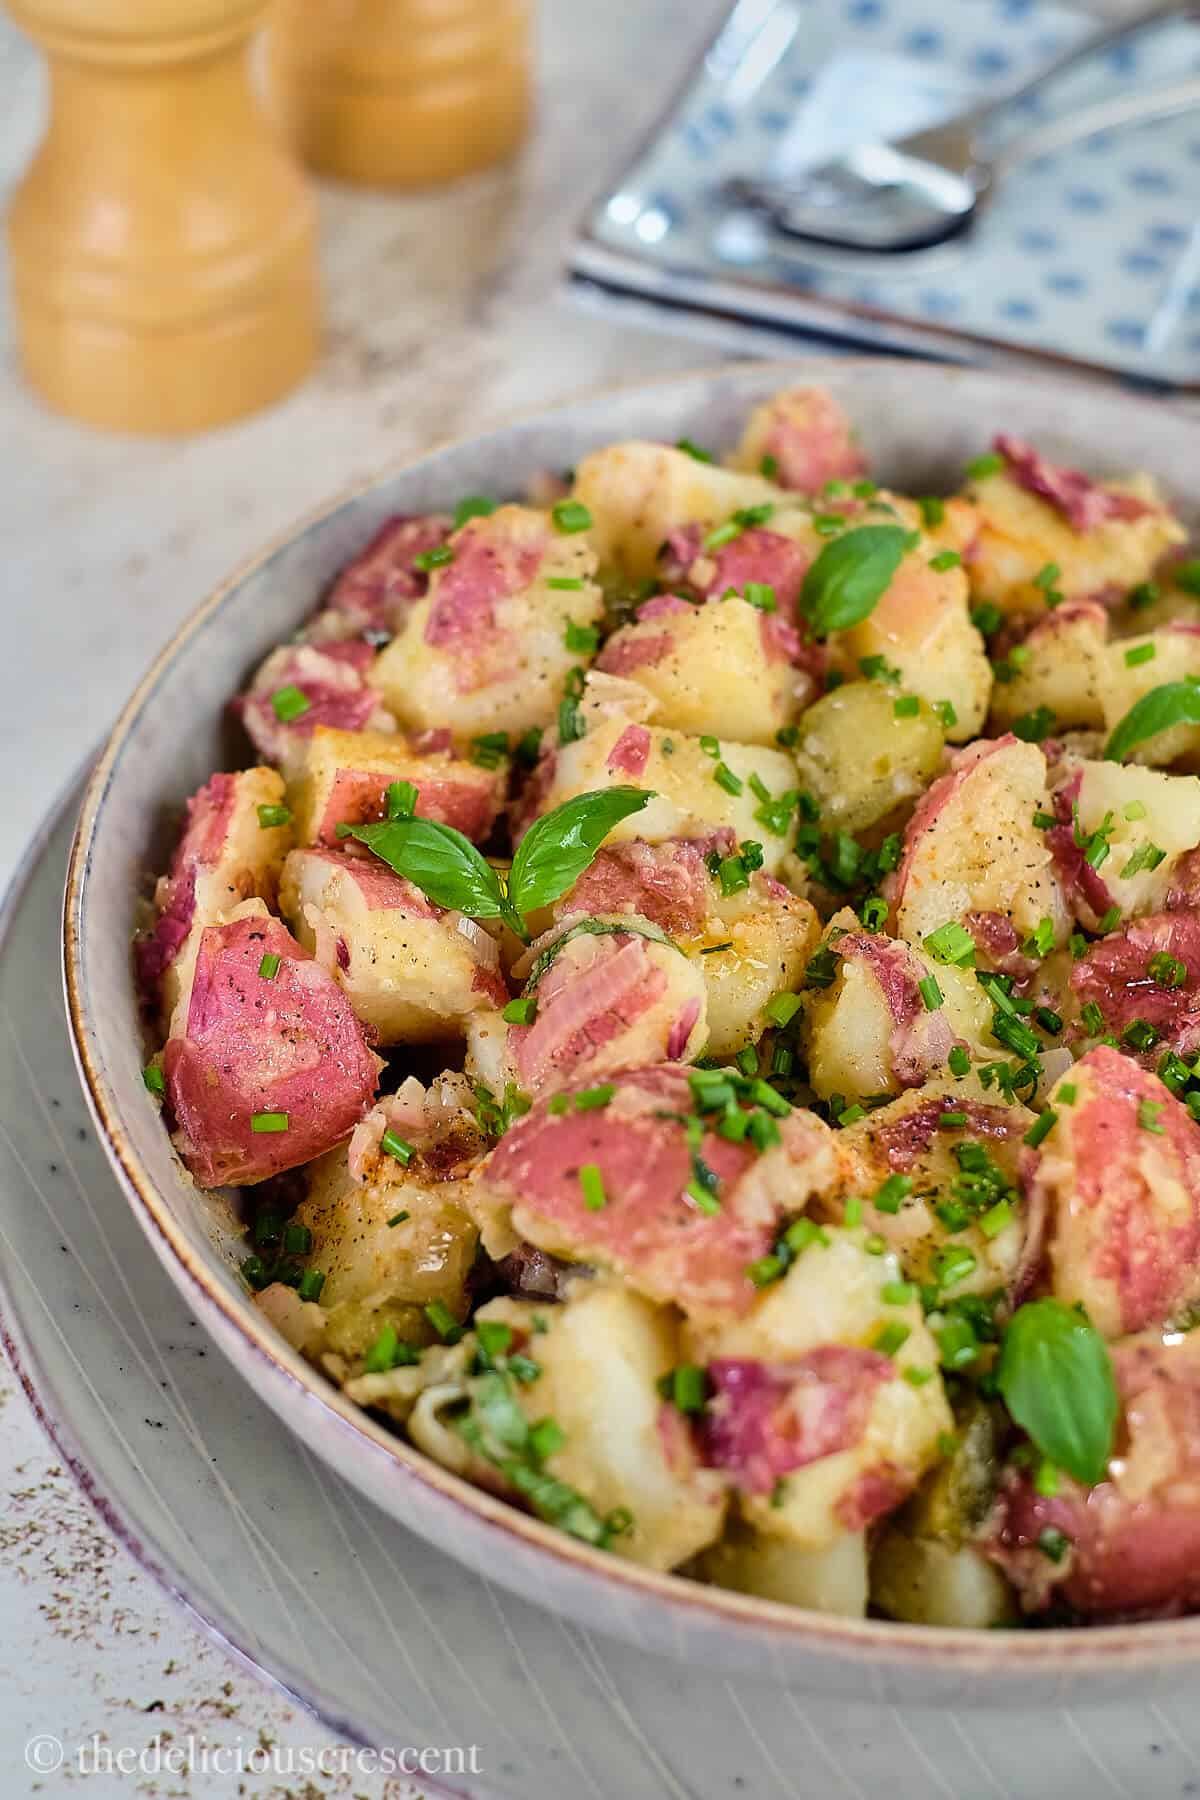 Vegan German potato salad in a grey bowl.